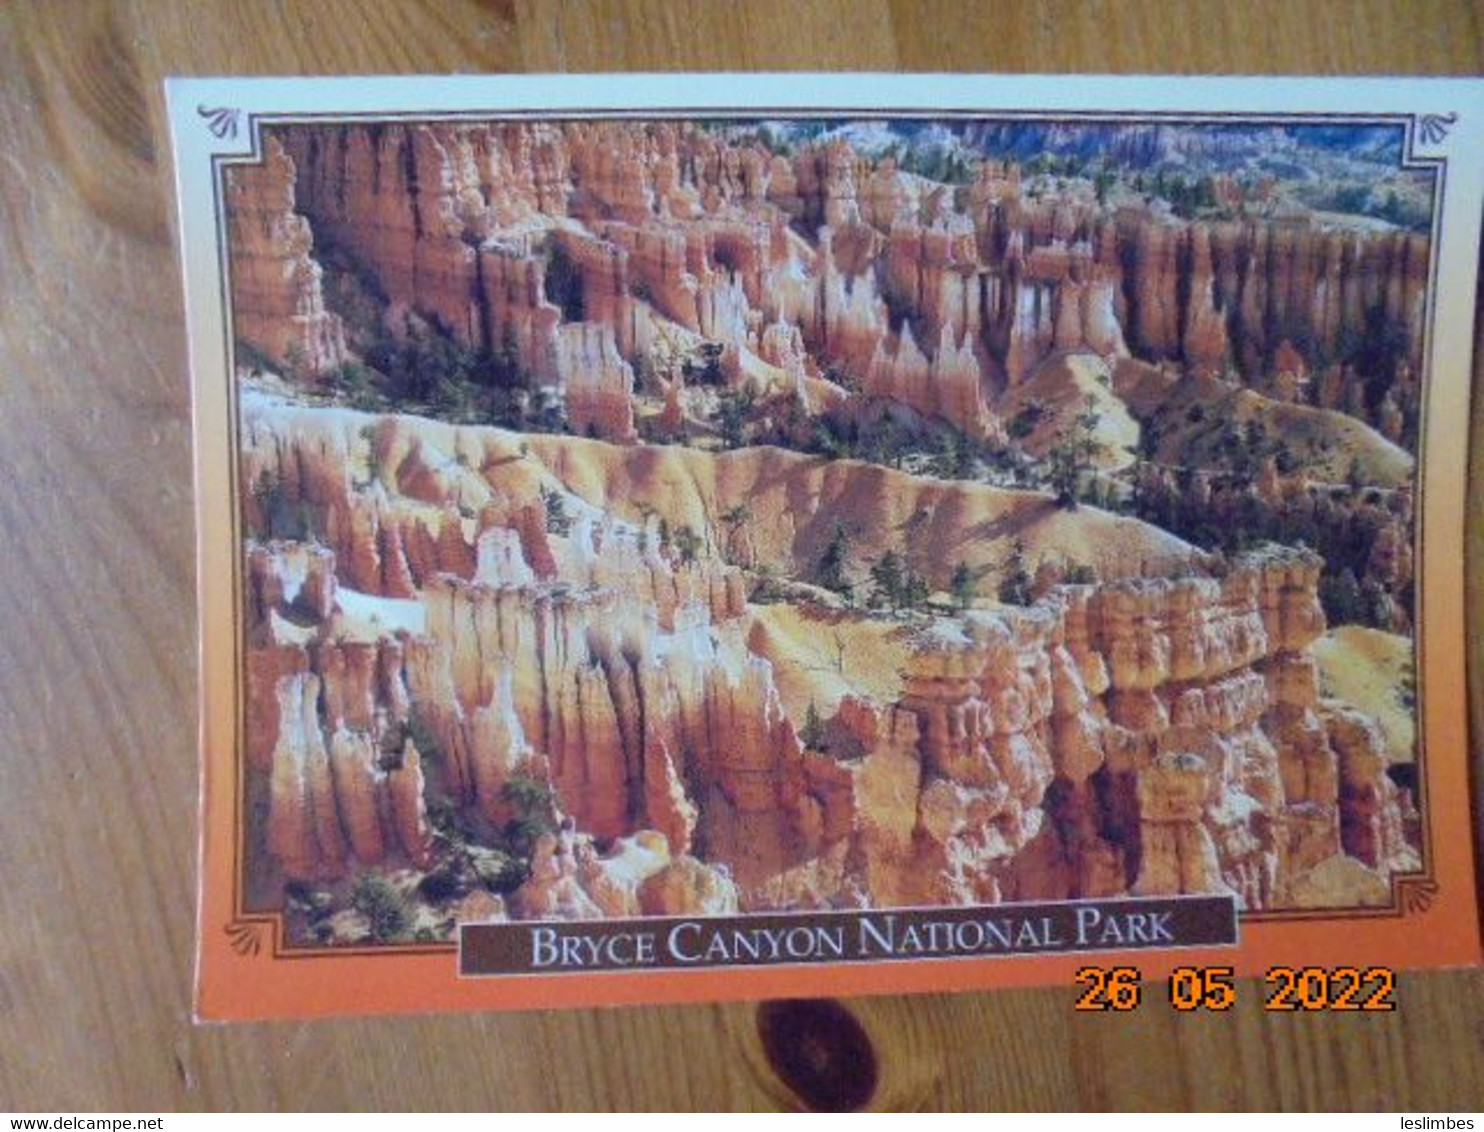 Bryce Canyon National Park, Utah. Blackner 2US UT 261 PM 1999 - Bryce Canyon